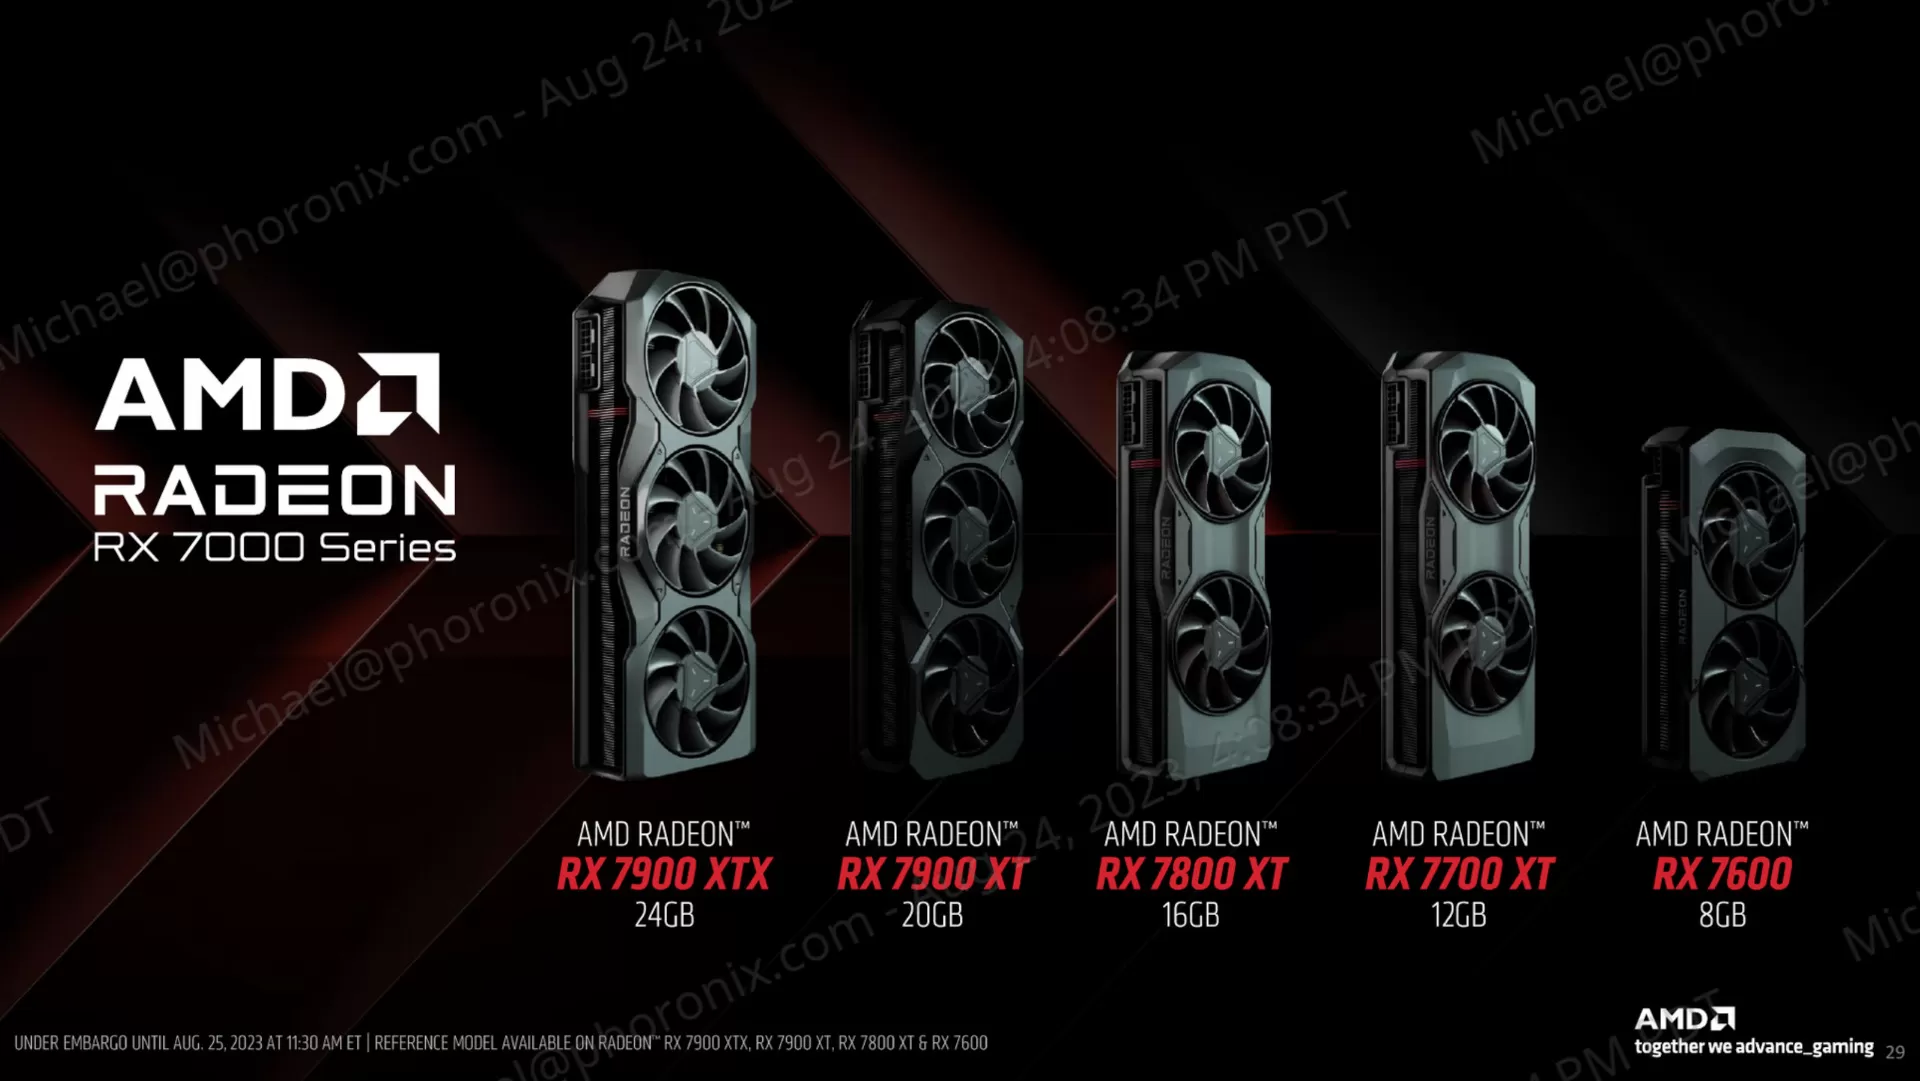 Radeon RX 7000 series cards